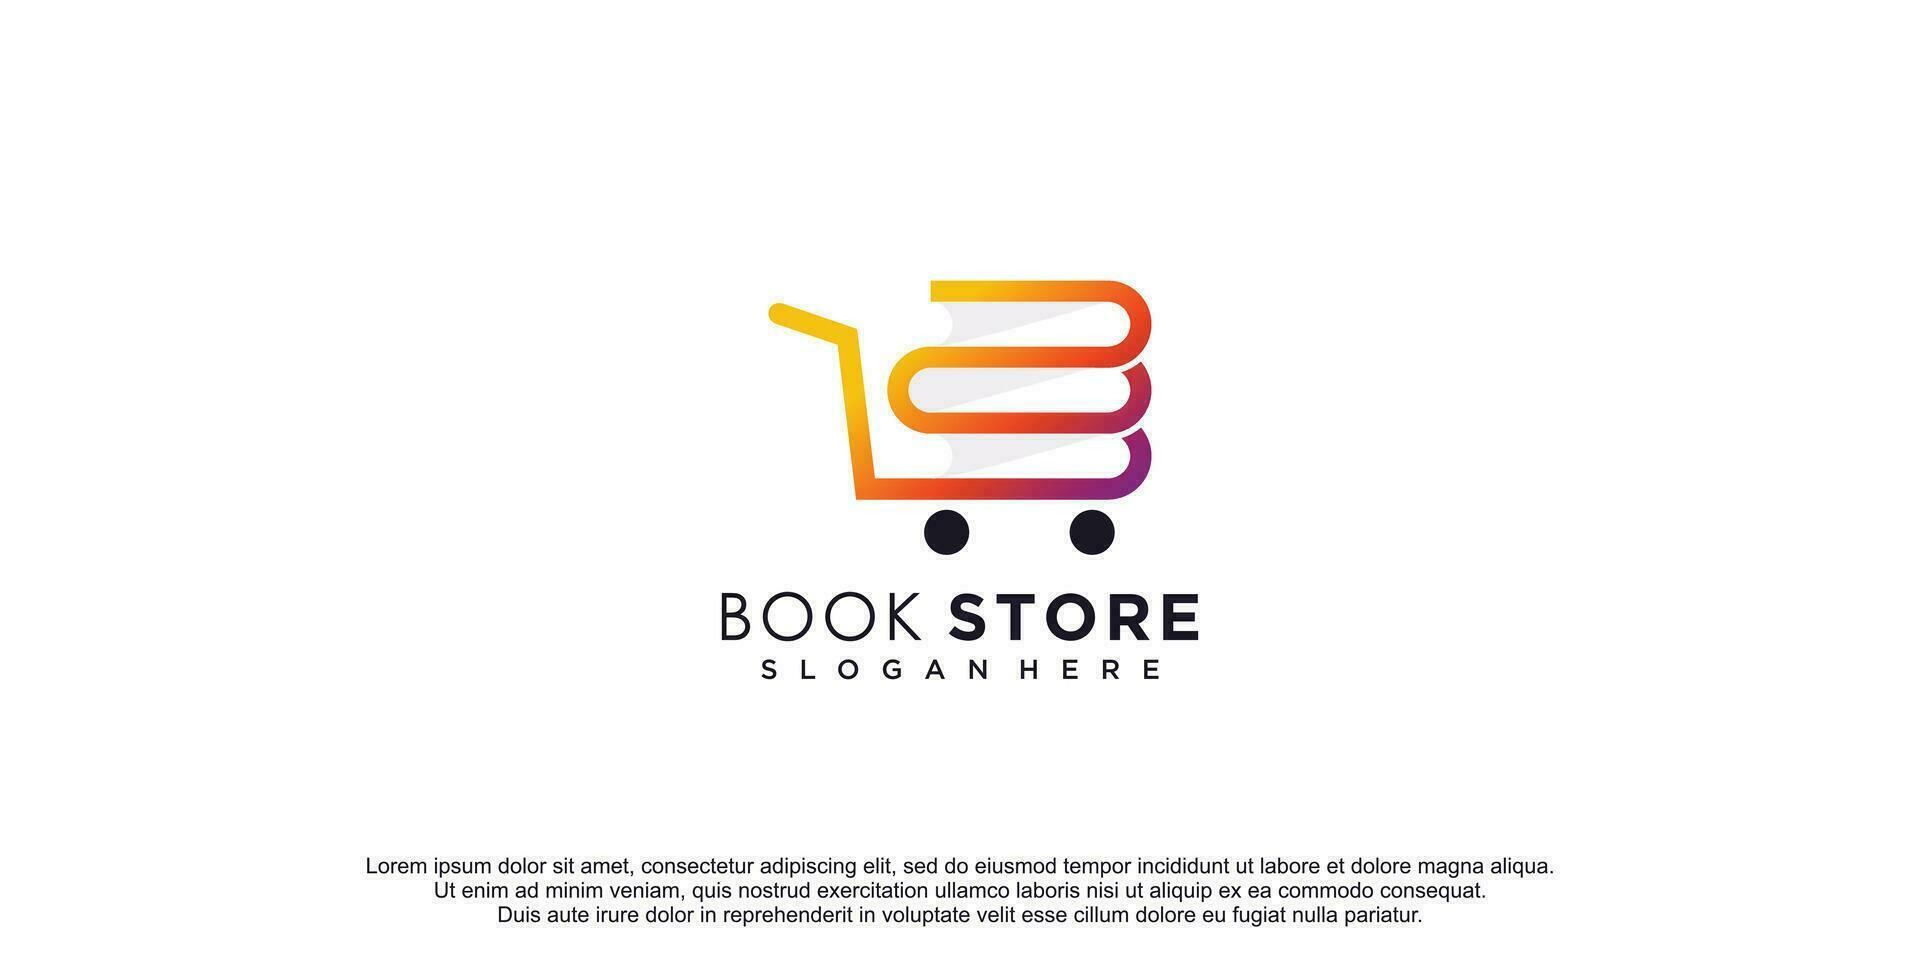 Book store logo with trolley concept design premium vector